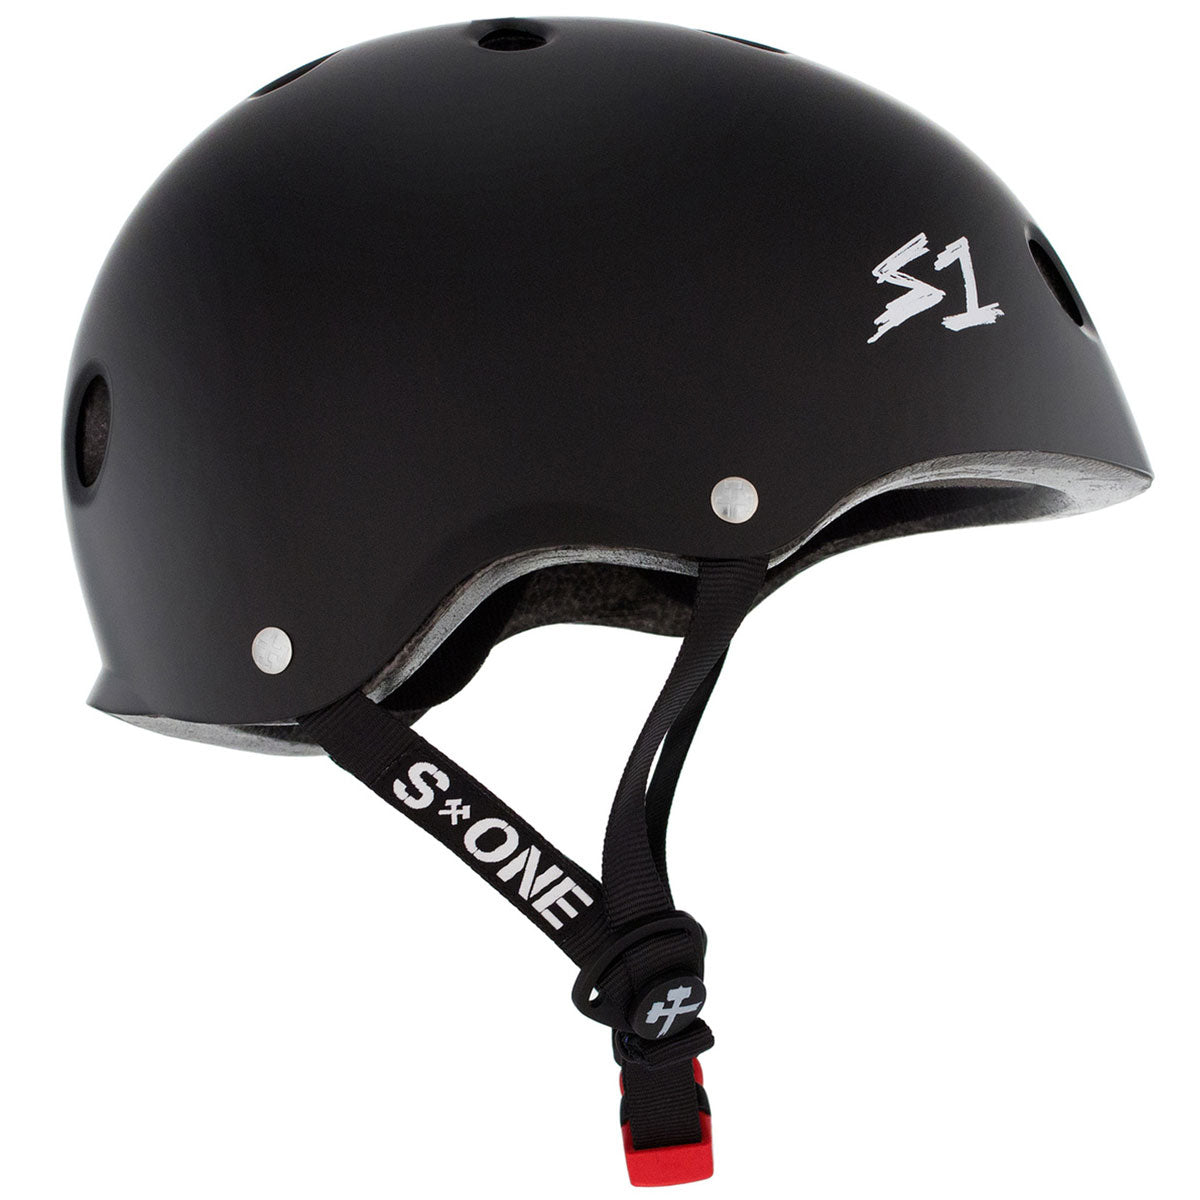 S-One Mini Lifer Helmet - Black Matte image 2